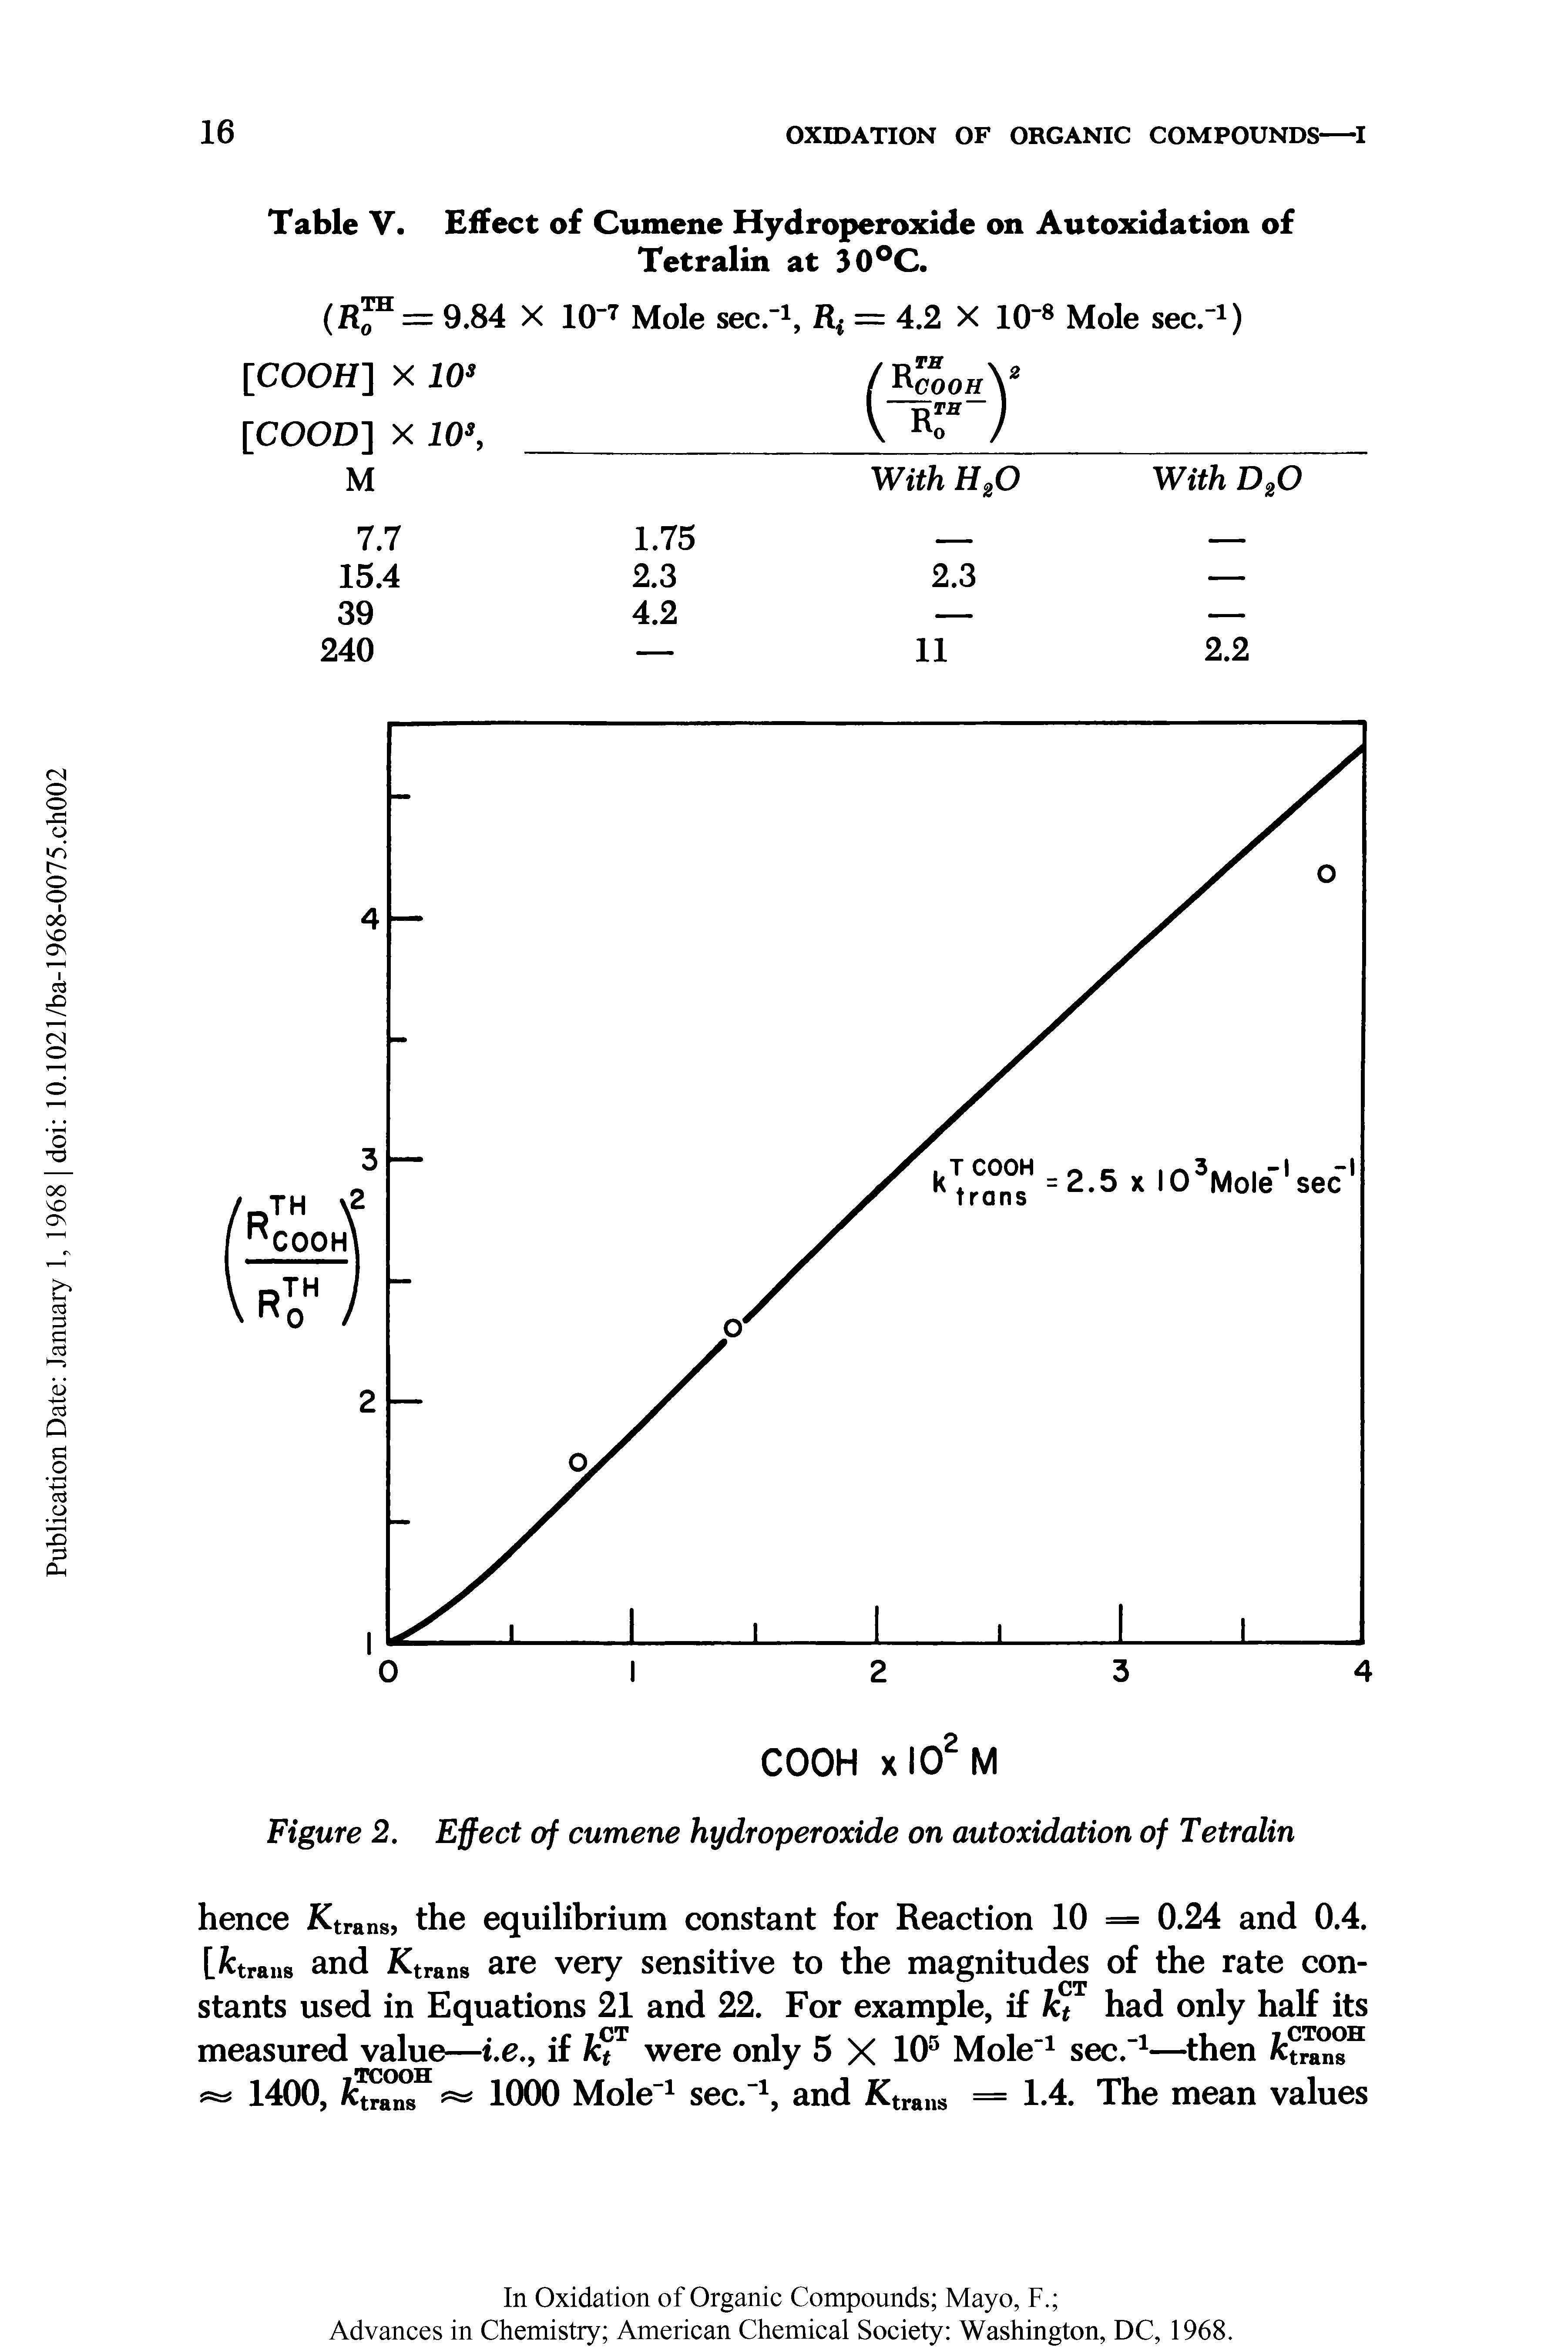 Table V. Effect of Cumene Hydroperoxide on Autoxidation of Tetralin at 30°C.